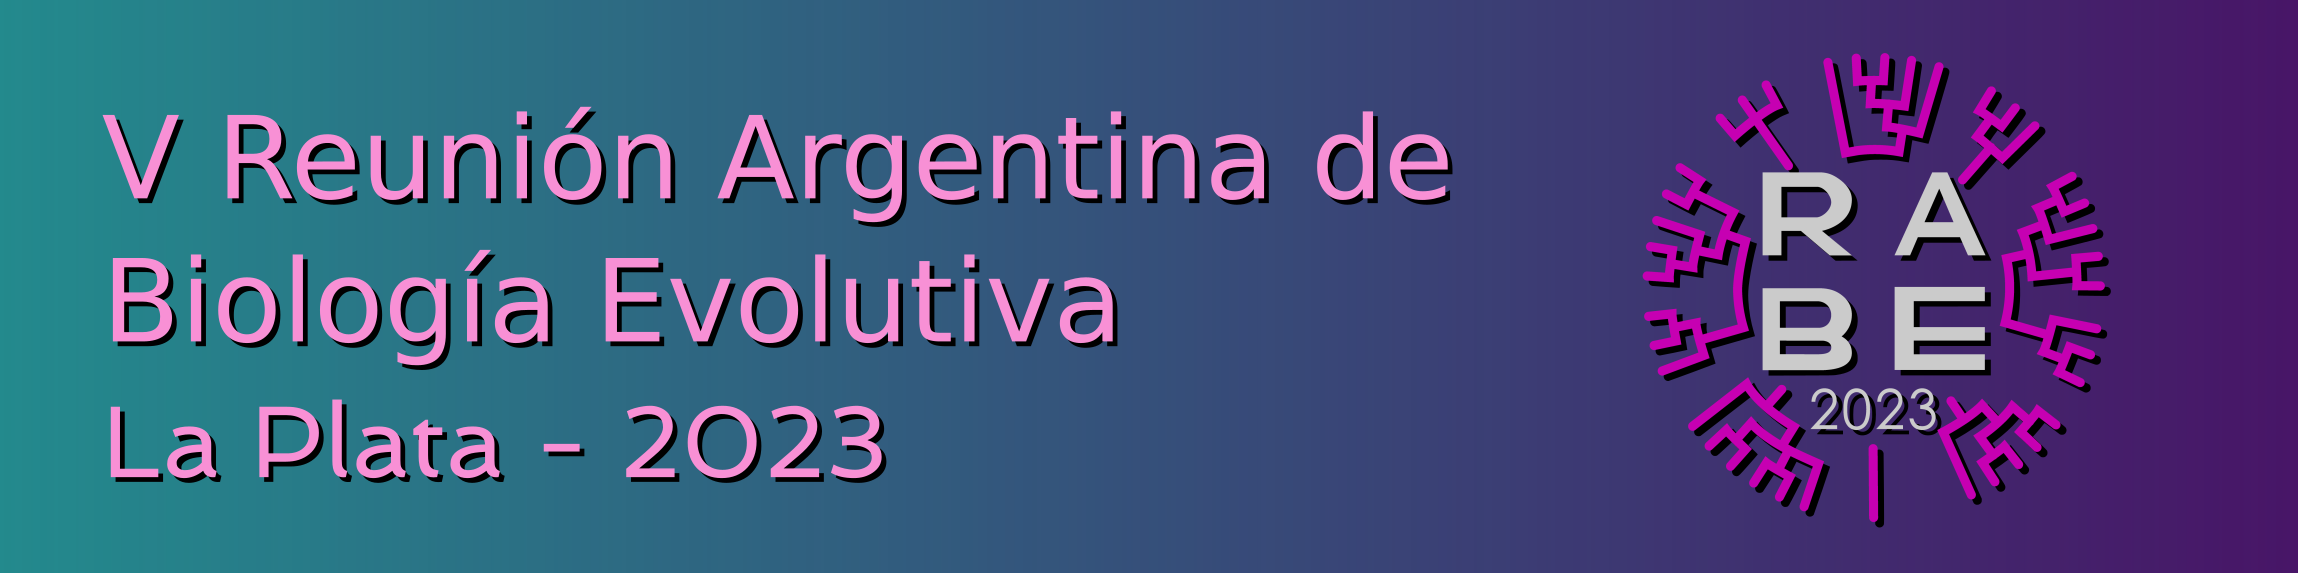 V Reunión Argentina de Biología Evolutiva Logo